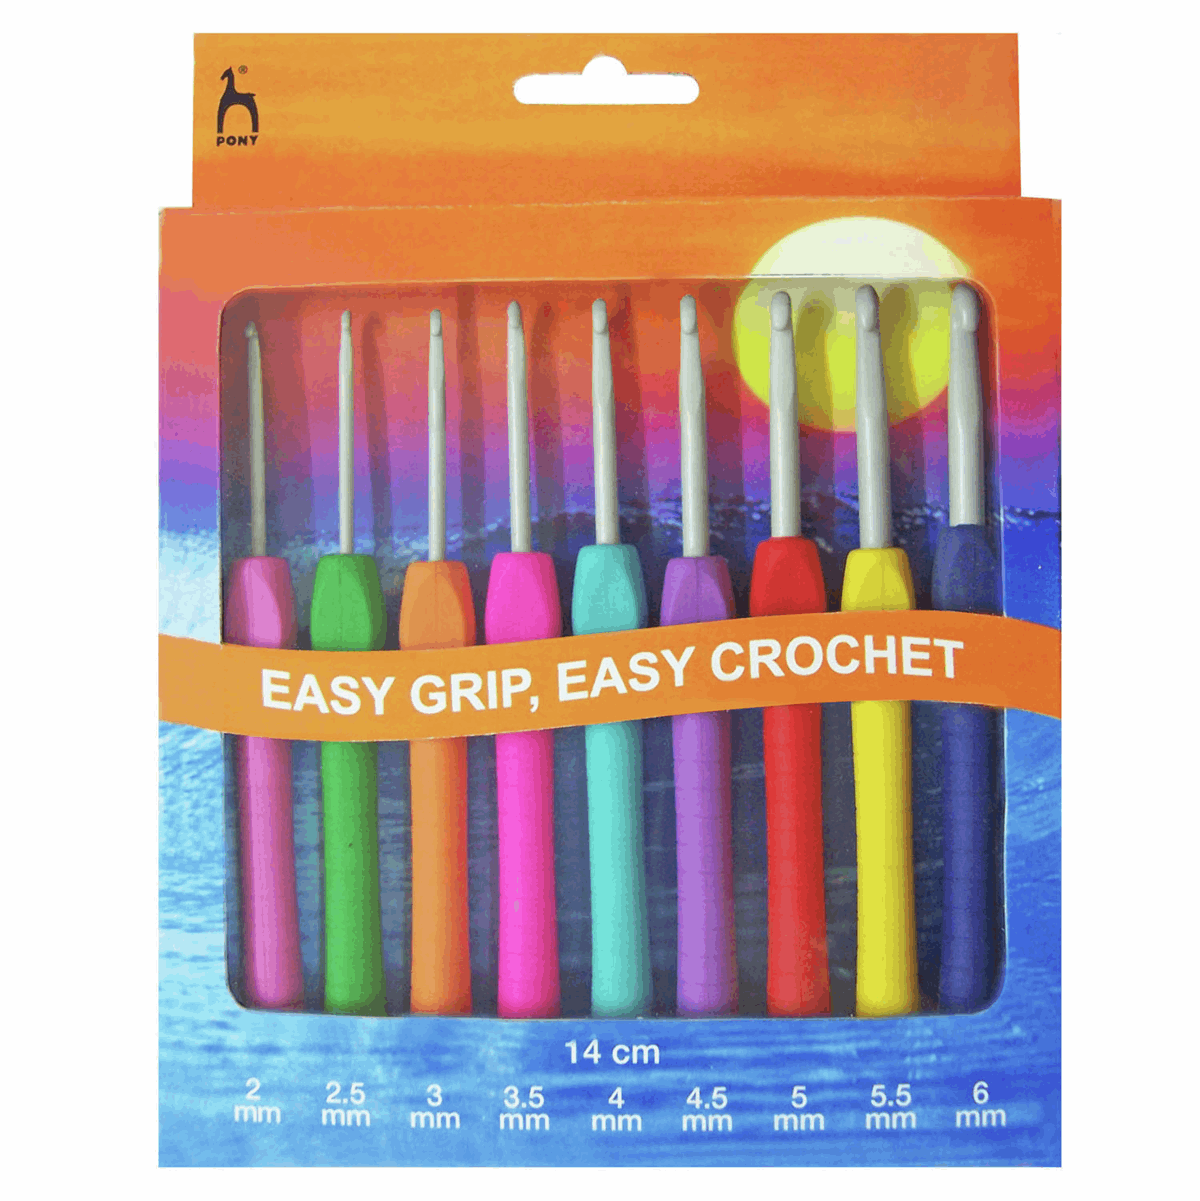 PONY Easy Grip Crochet Hook Set - Sizes 2mm-6mm